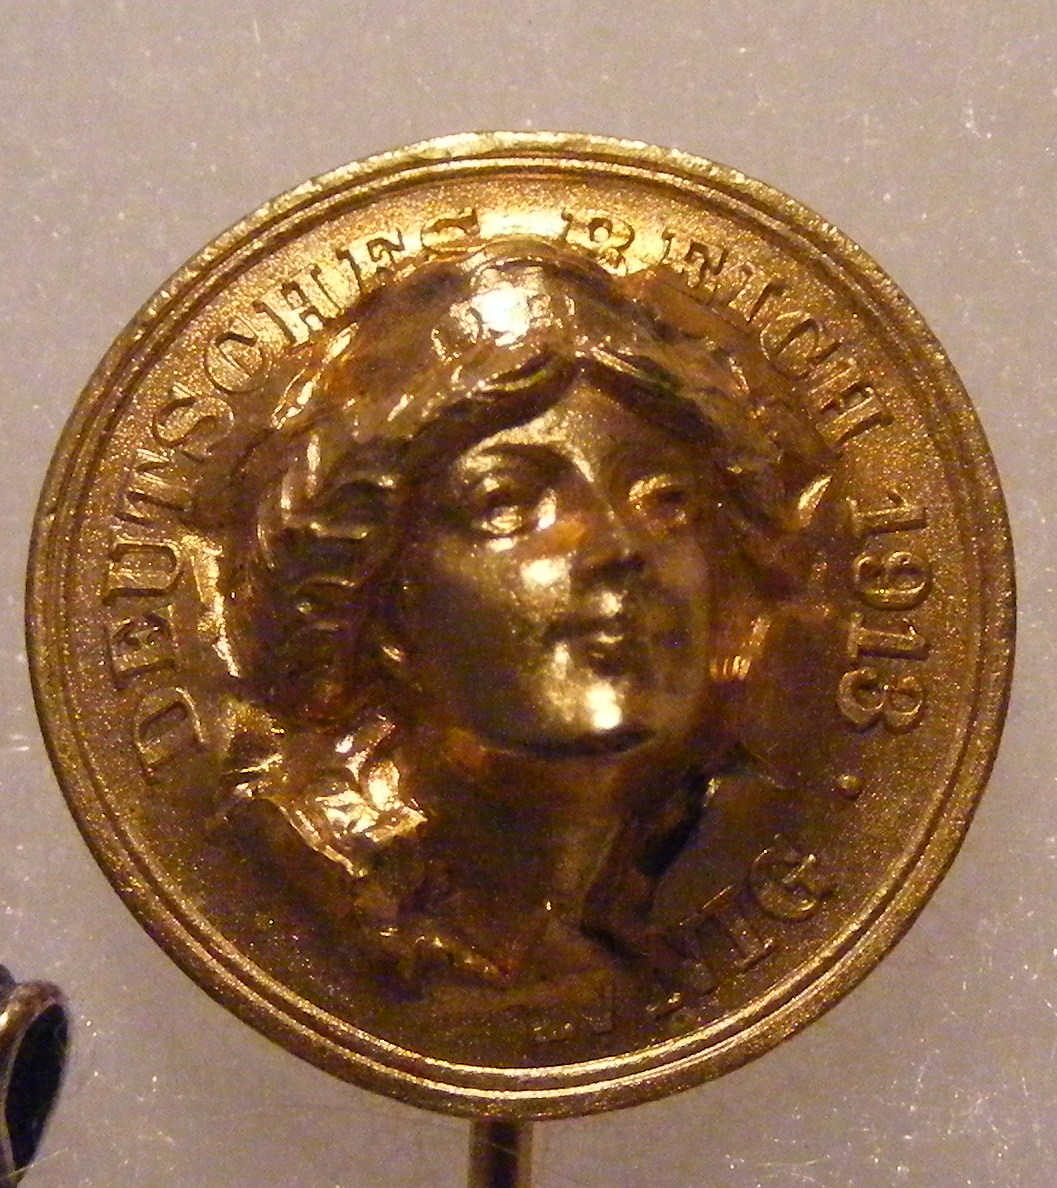 German Pfenning - Dime sized liberty 1913 Gold plated, on stick pin, DRGM.jpg